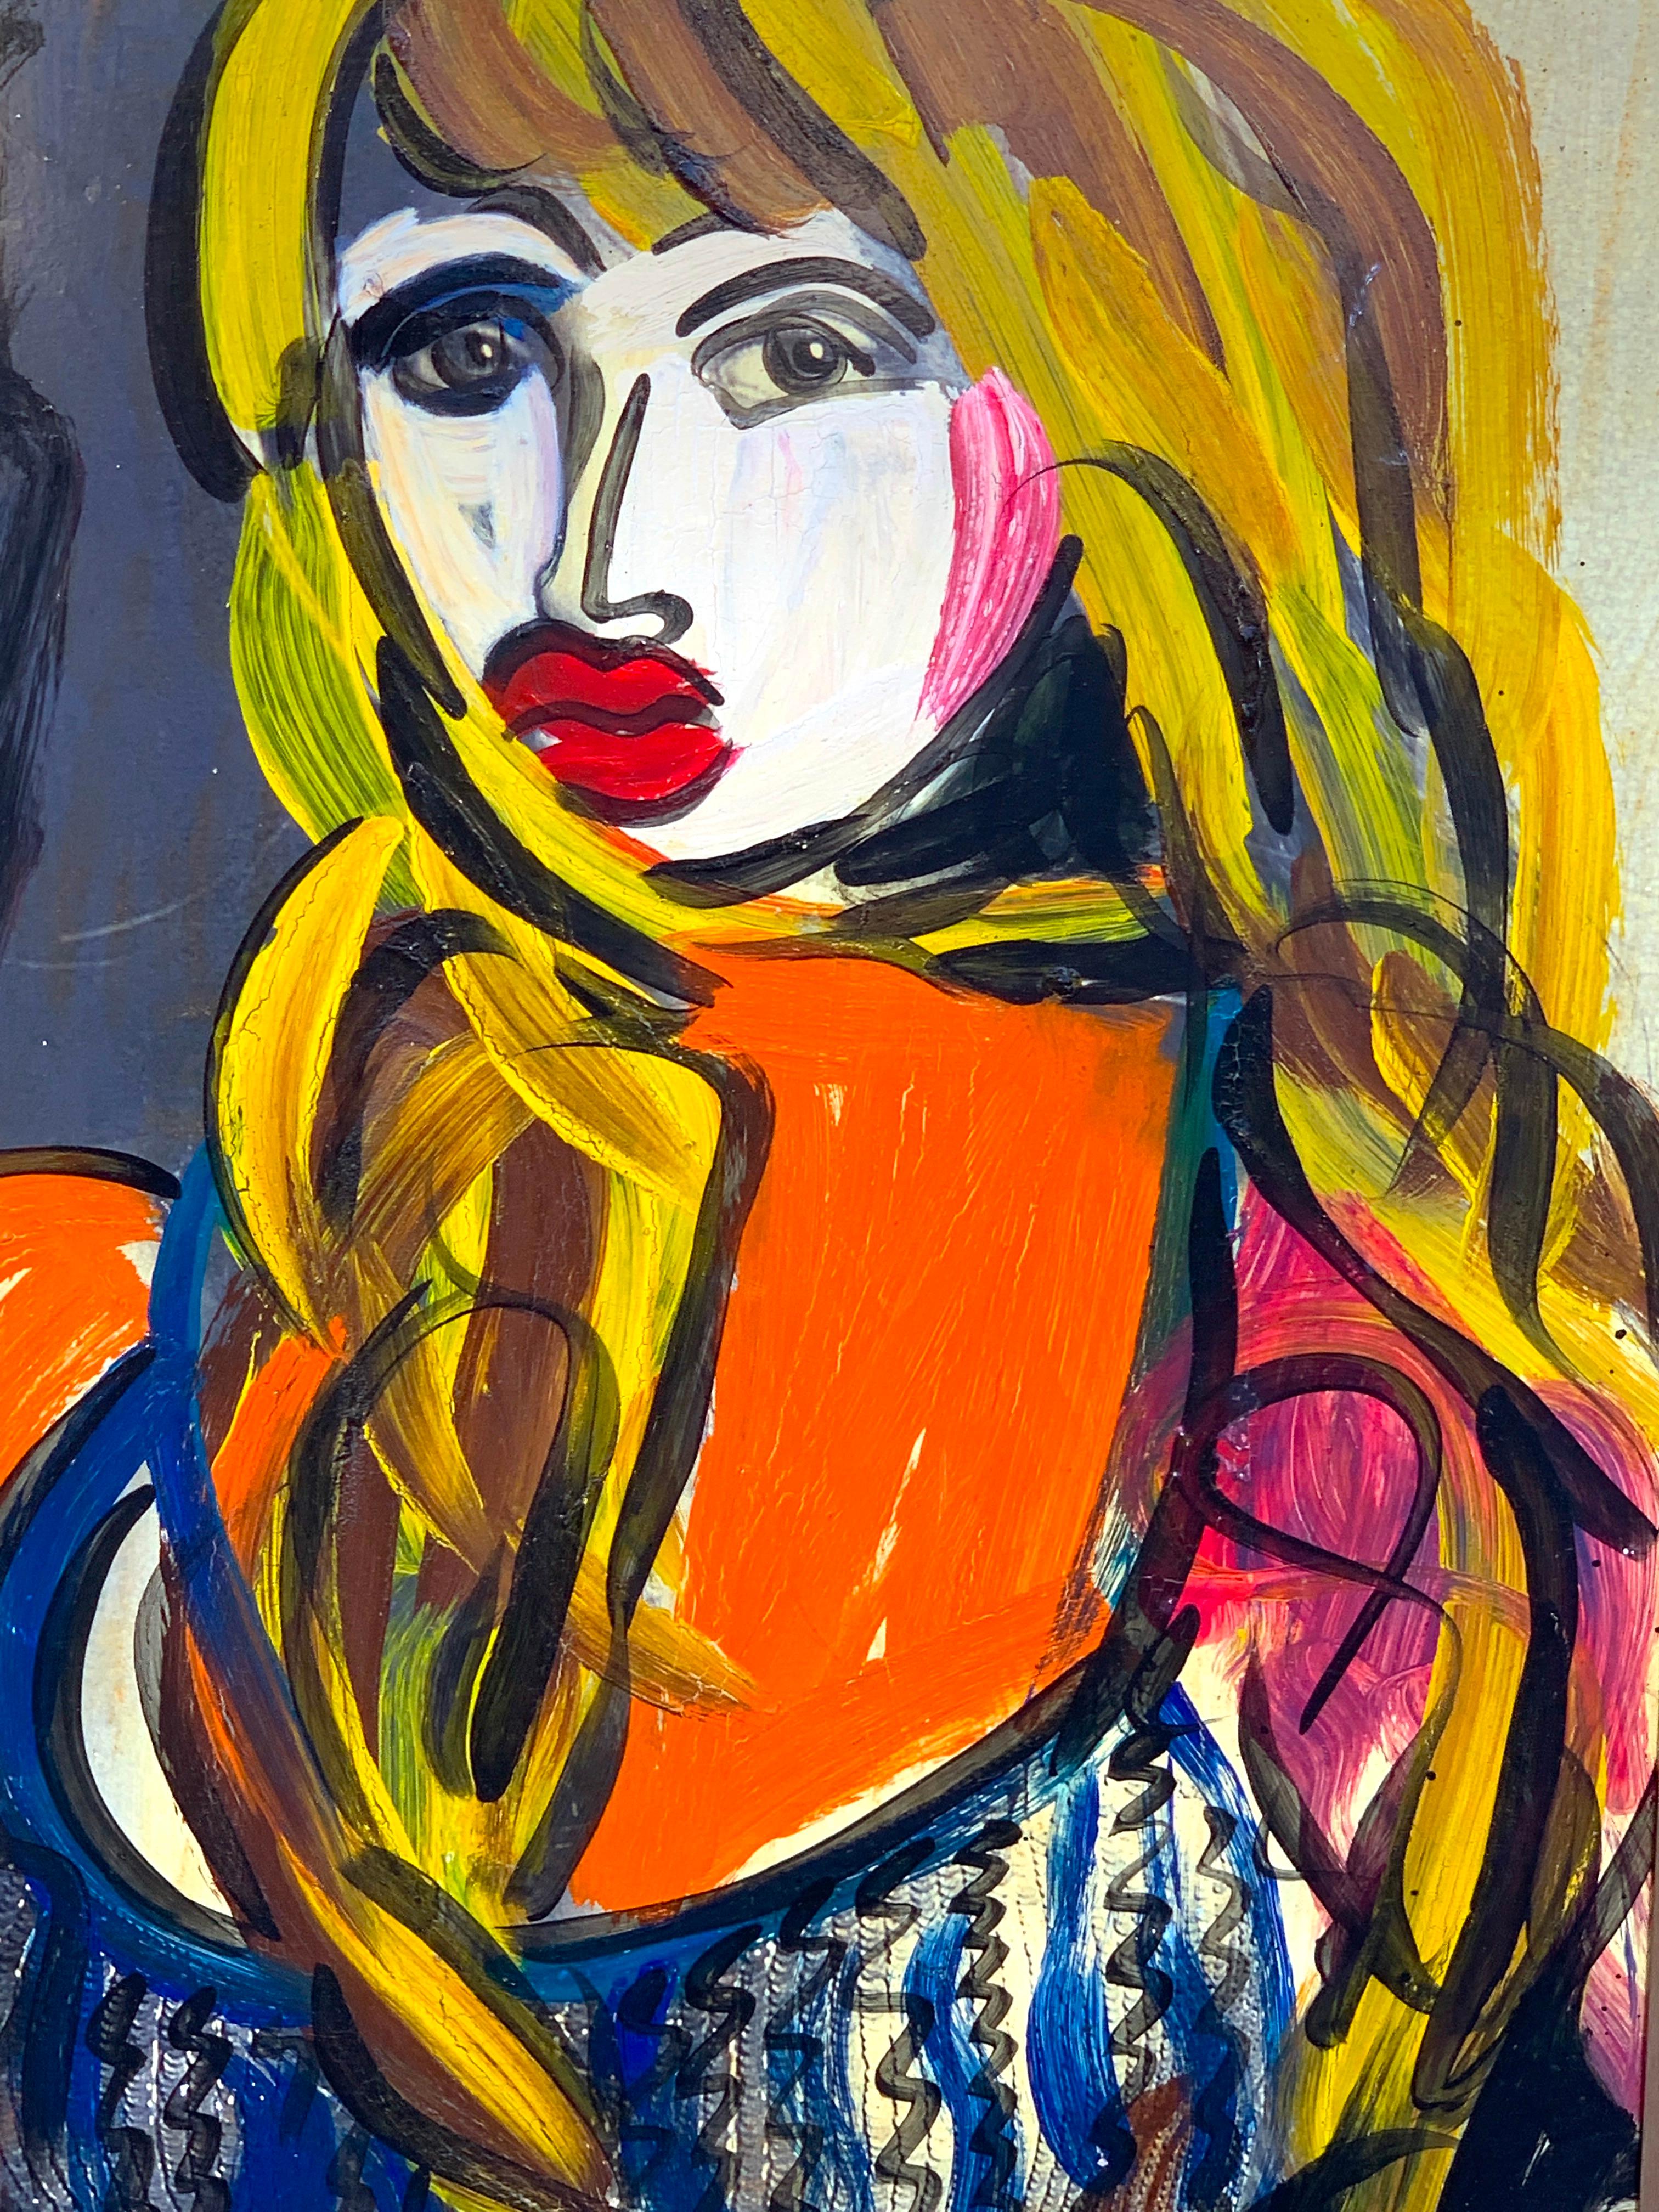 Abstraktes abstraktes Porträt mit dem Titel „Elisabeth Taylor“, Peter Keil, Berlin, 1995 (Deutsch)